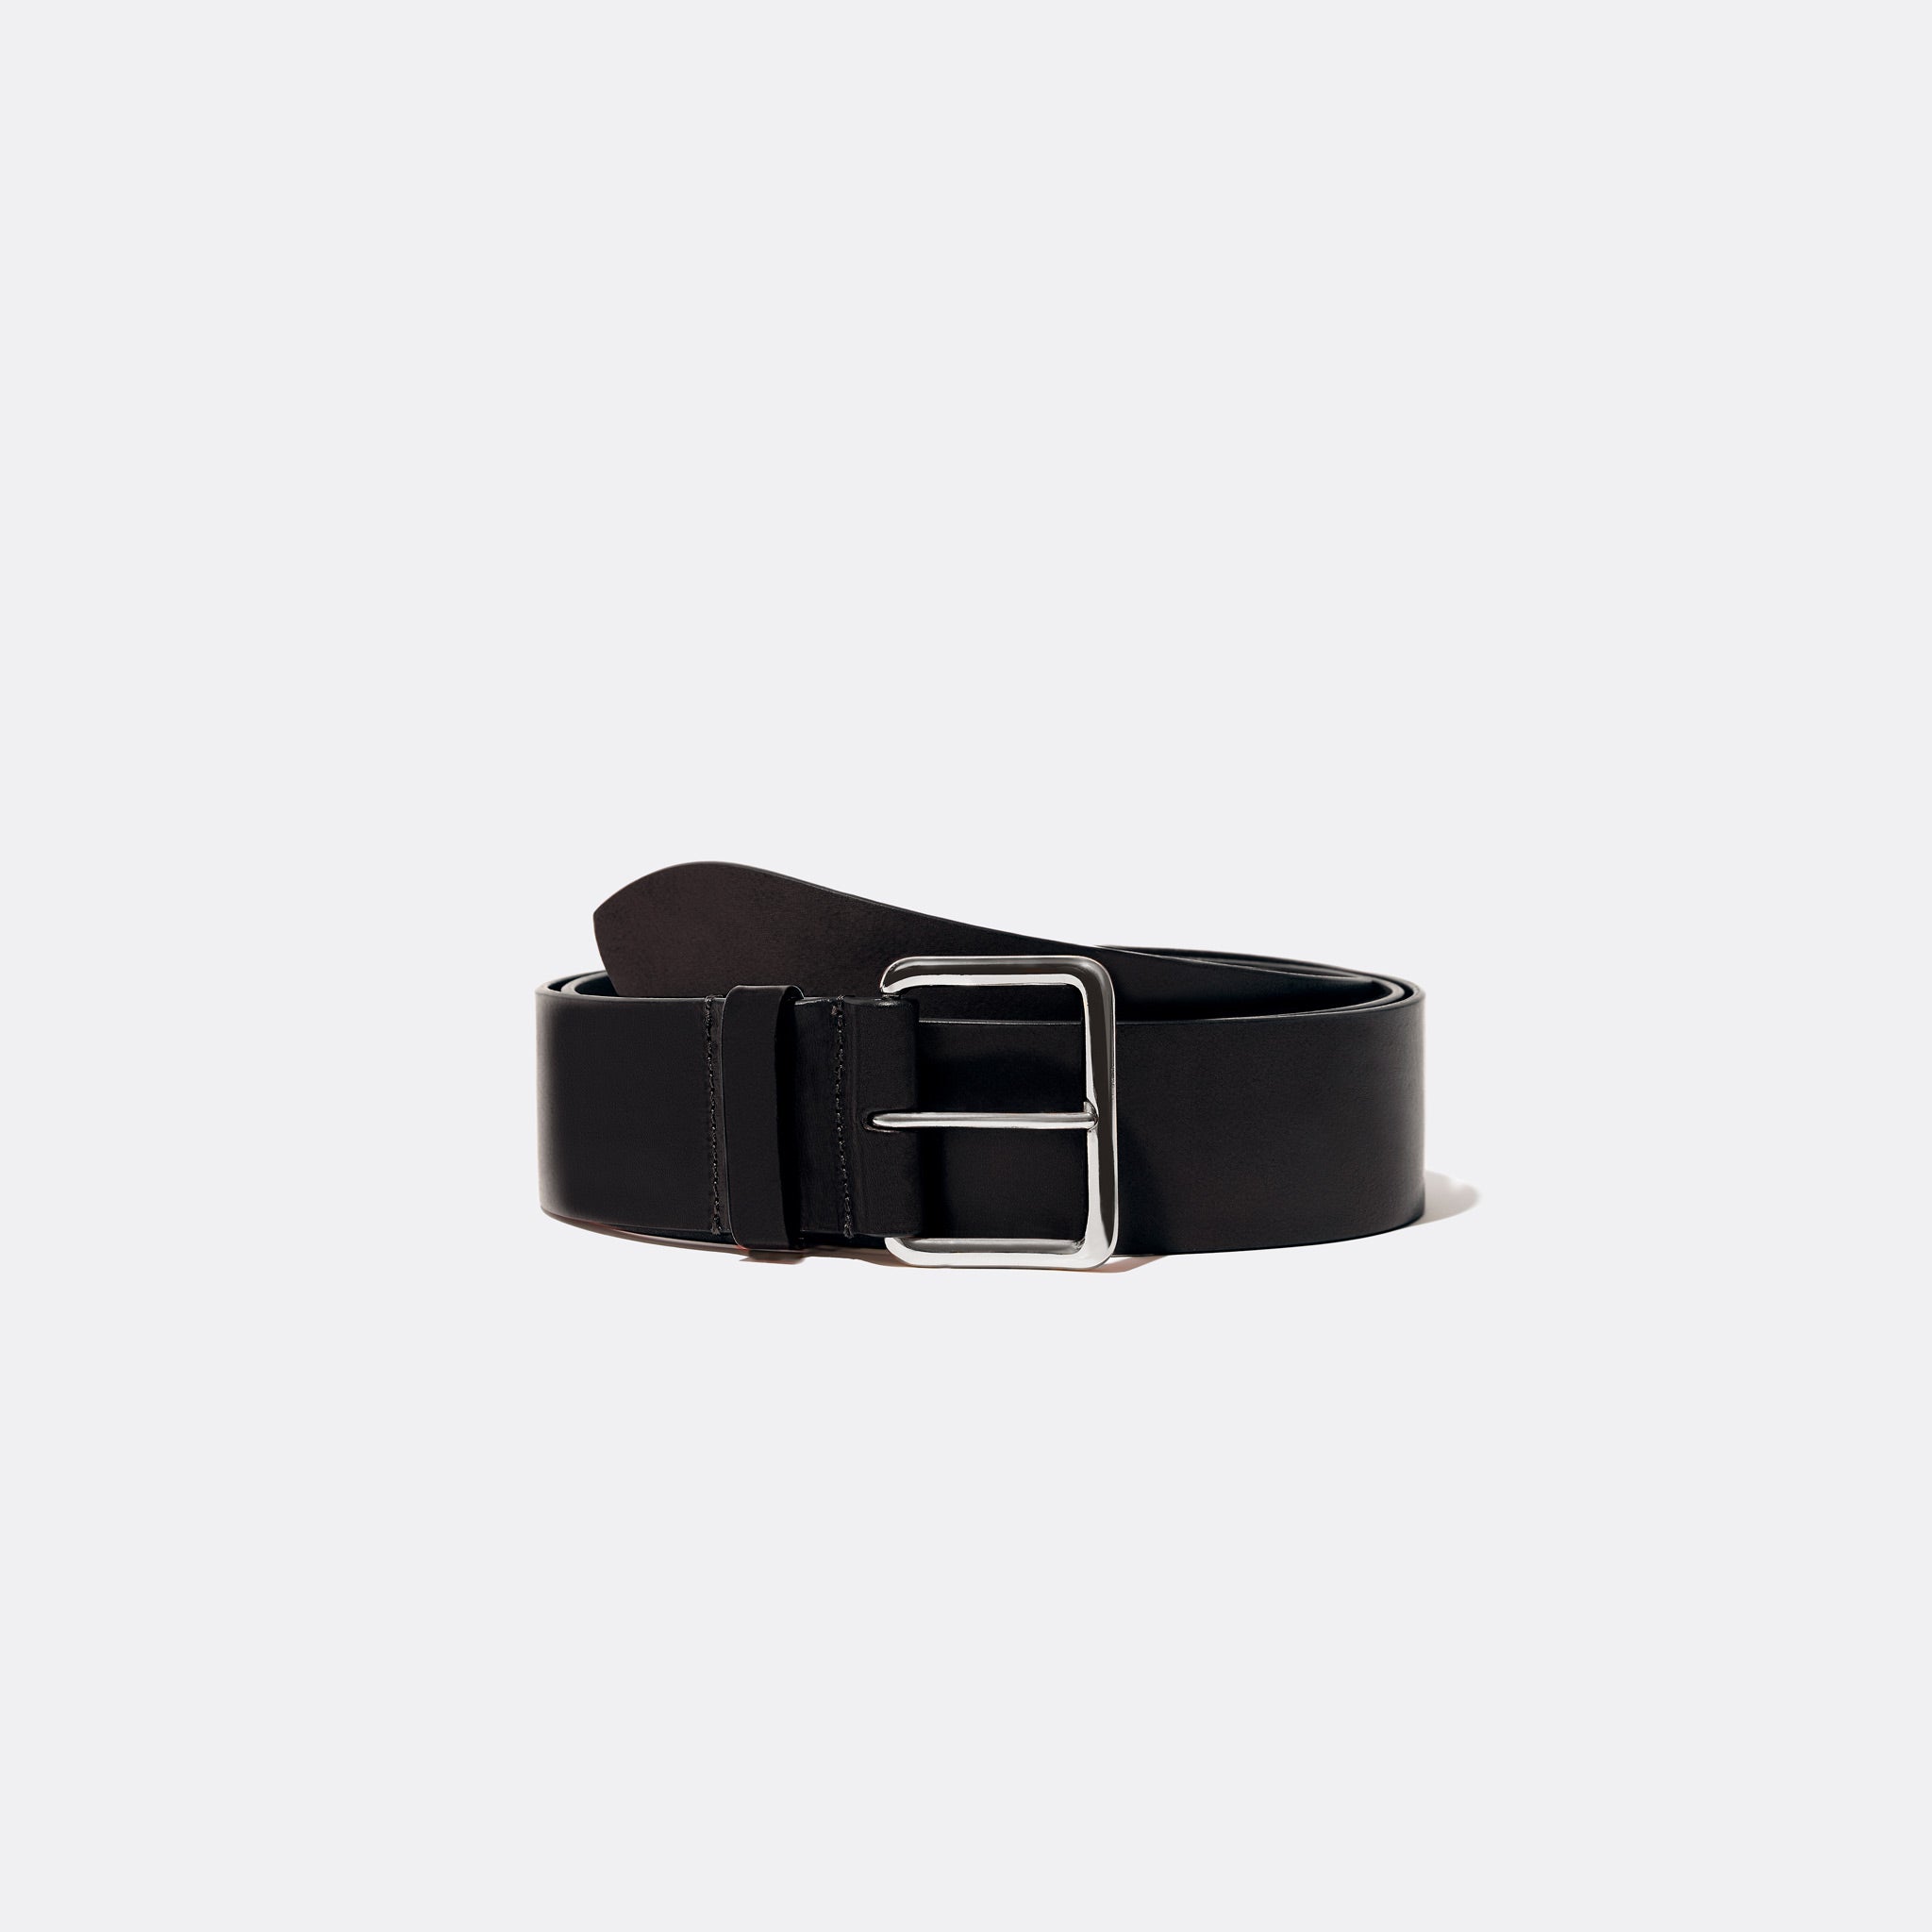 1.75 Inch (45mm) Wide Black Leather Belt Strap with Chicago Screws – Buckle  My Belt